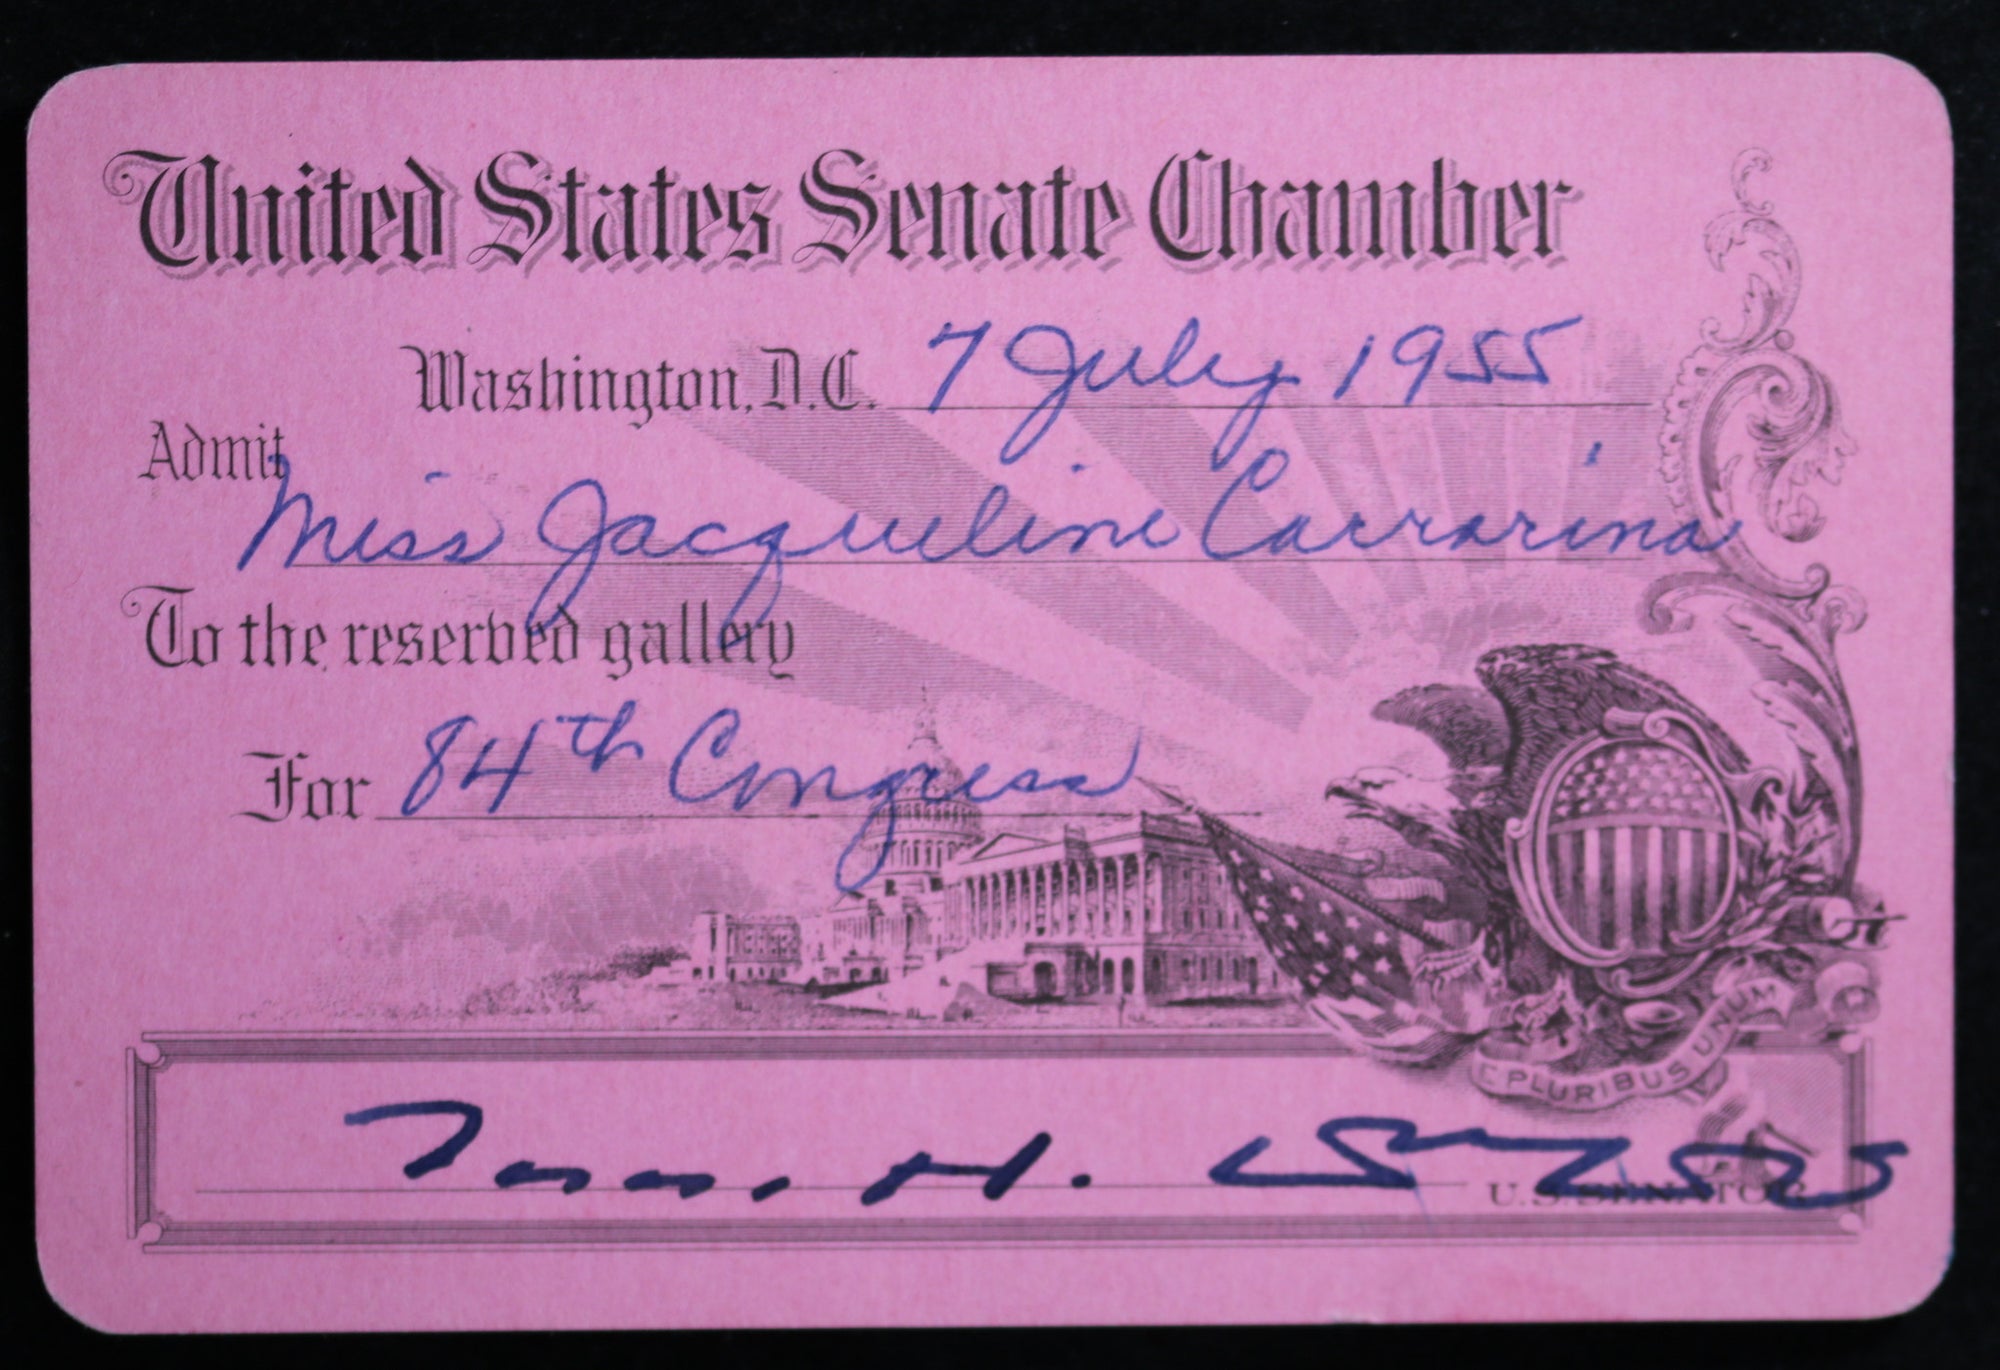 1955 pass for United States Senate Chamber